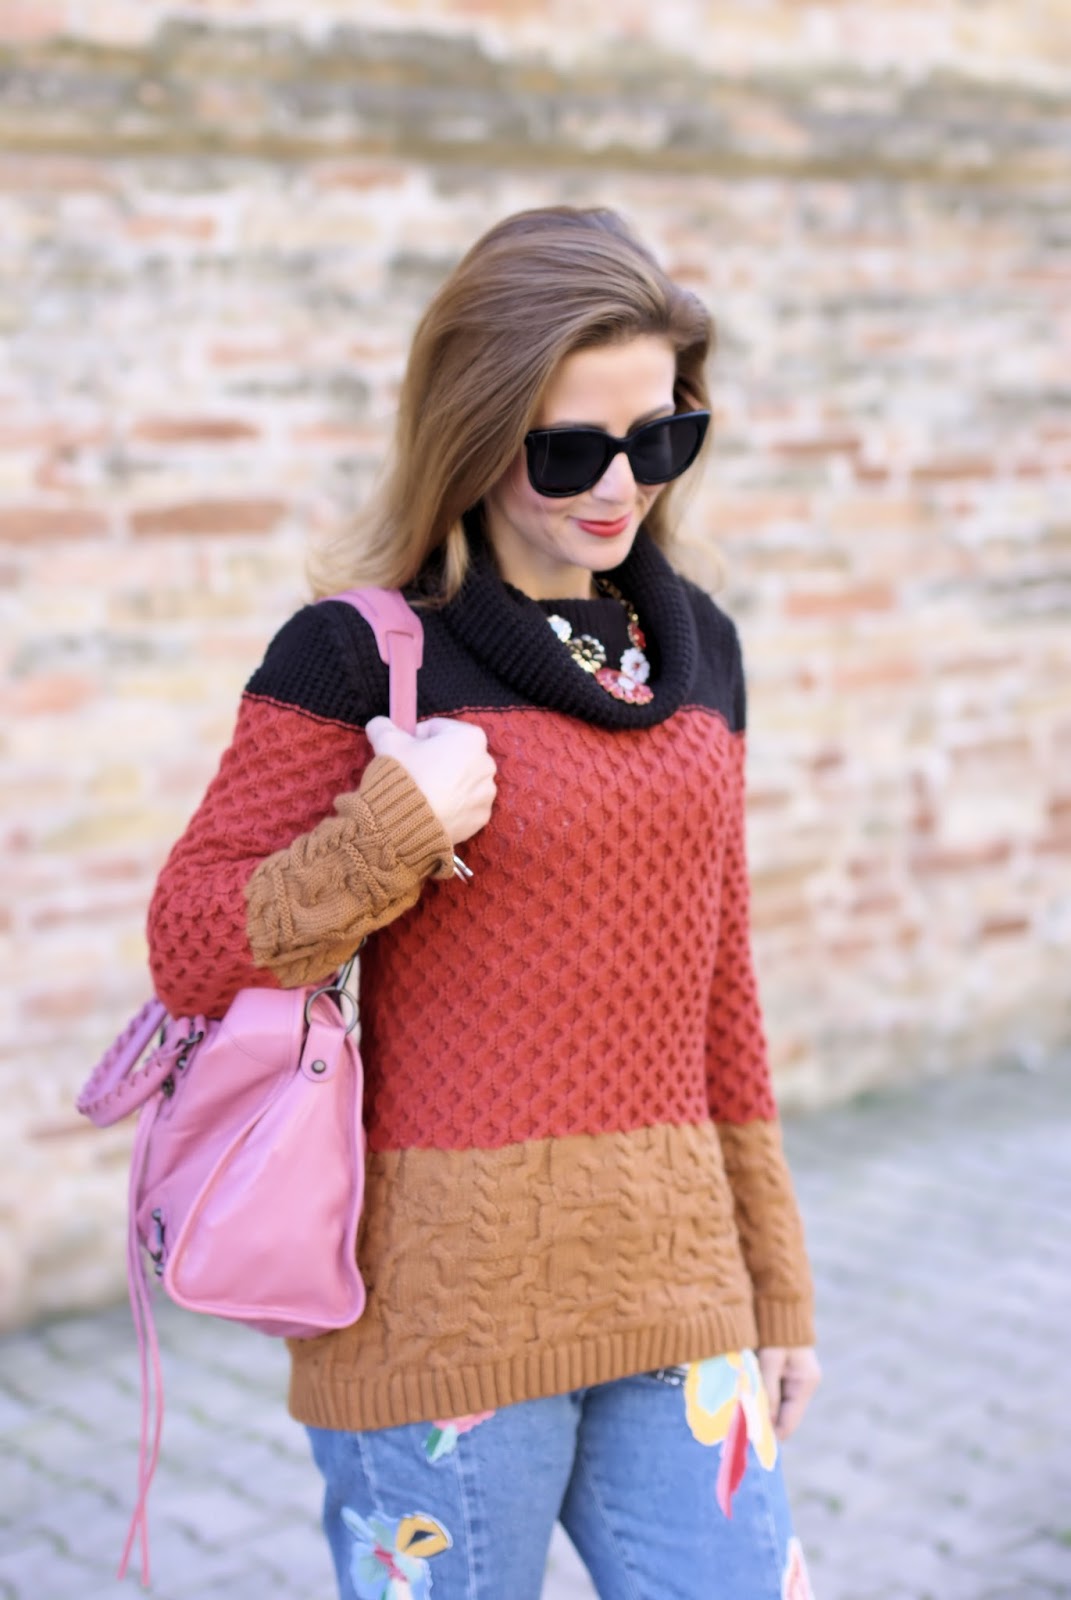 Winter Seventies Fashion with Smash! Gracian sweater and pink Balenciaga bag on Fashion and Cookies fashion blog, fashion blogger style